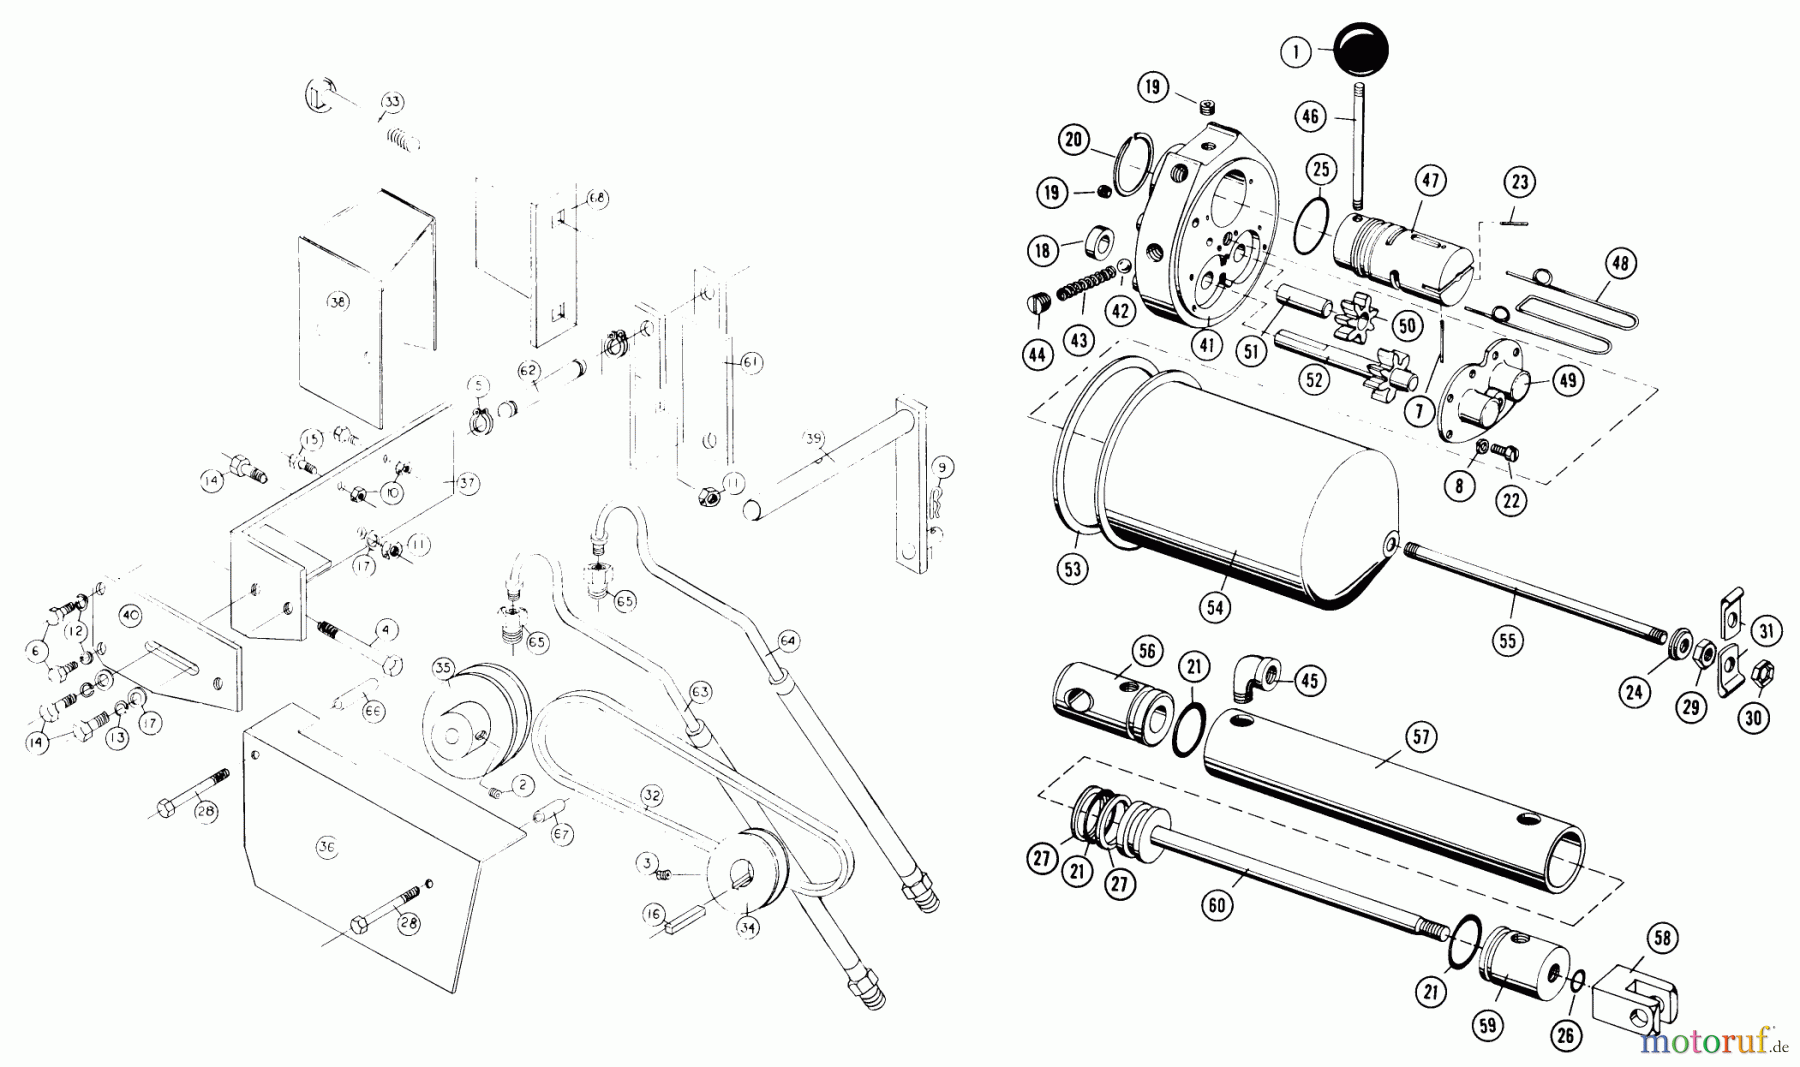  Toro Neu Accessories, Mower HL-6 - Toro Head/Tail Light Kit, 1967 REVISED PARTS LIST